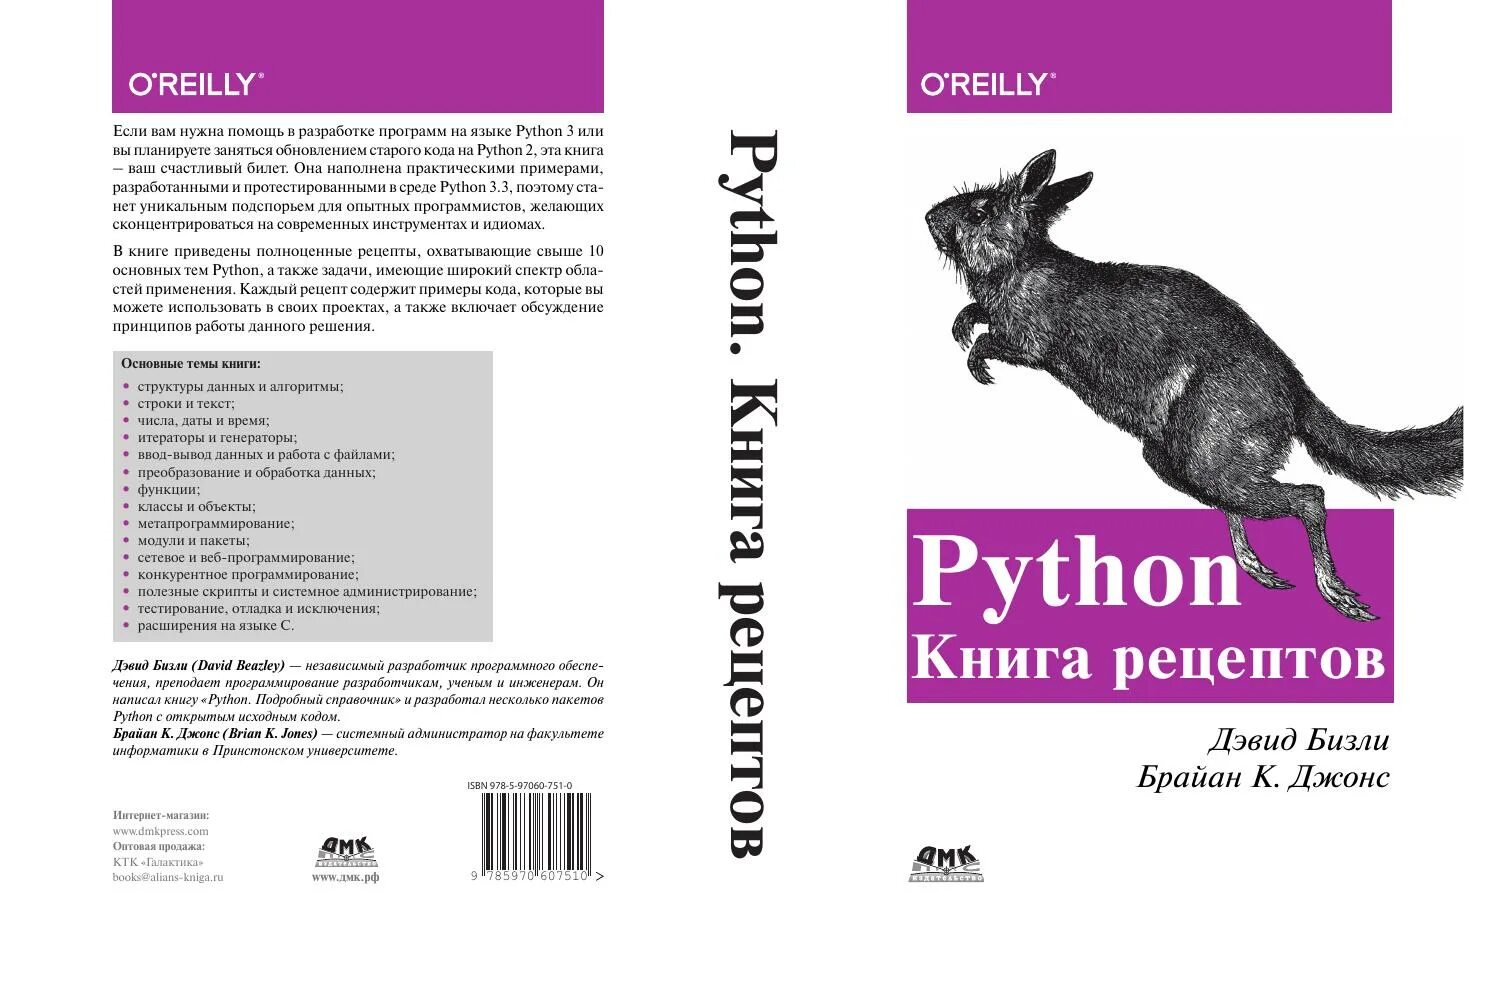 Язык python книги. Python книга. Программирование на Python книга. Дэвид Бизли книги. Бизли д. "Python".